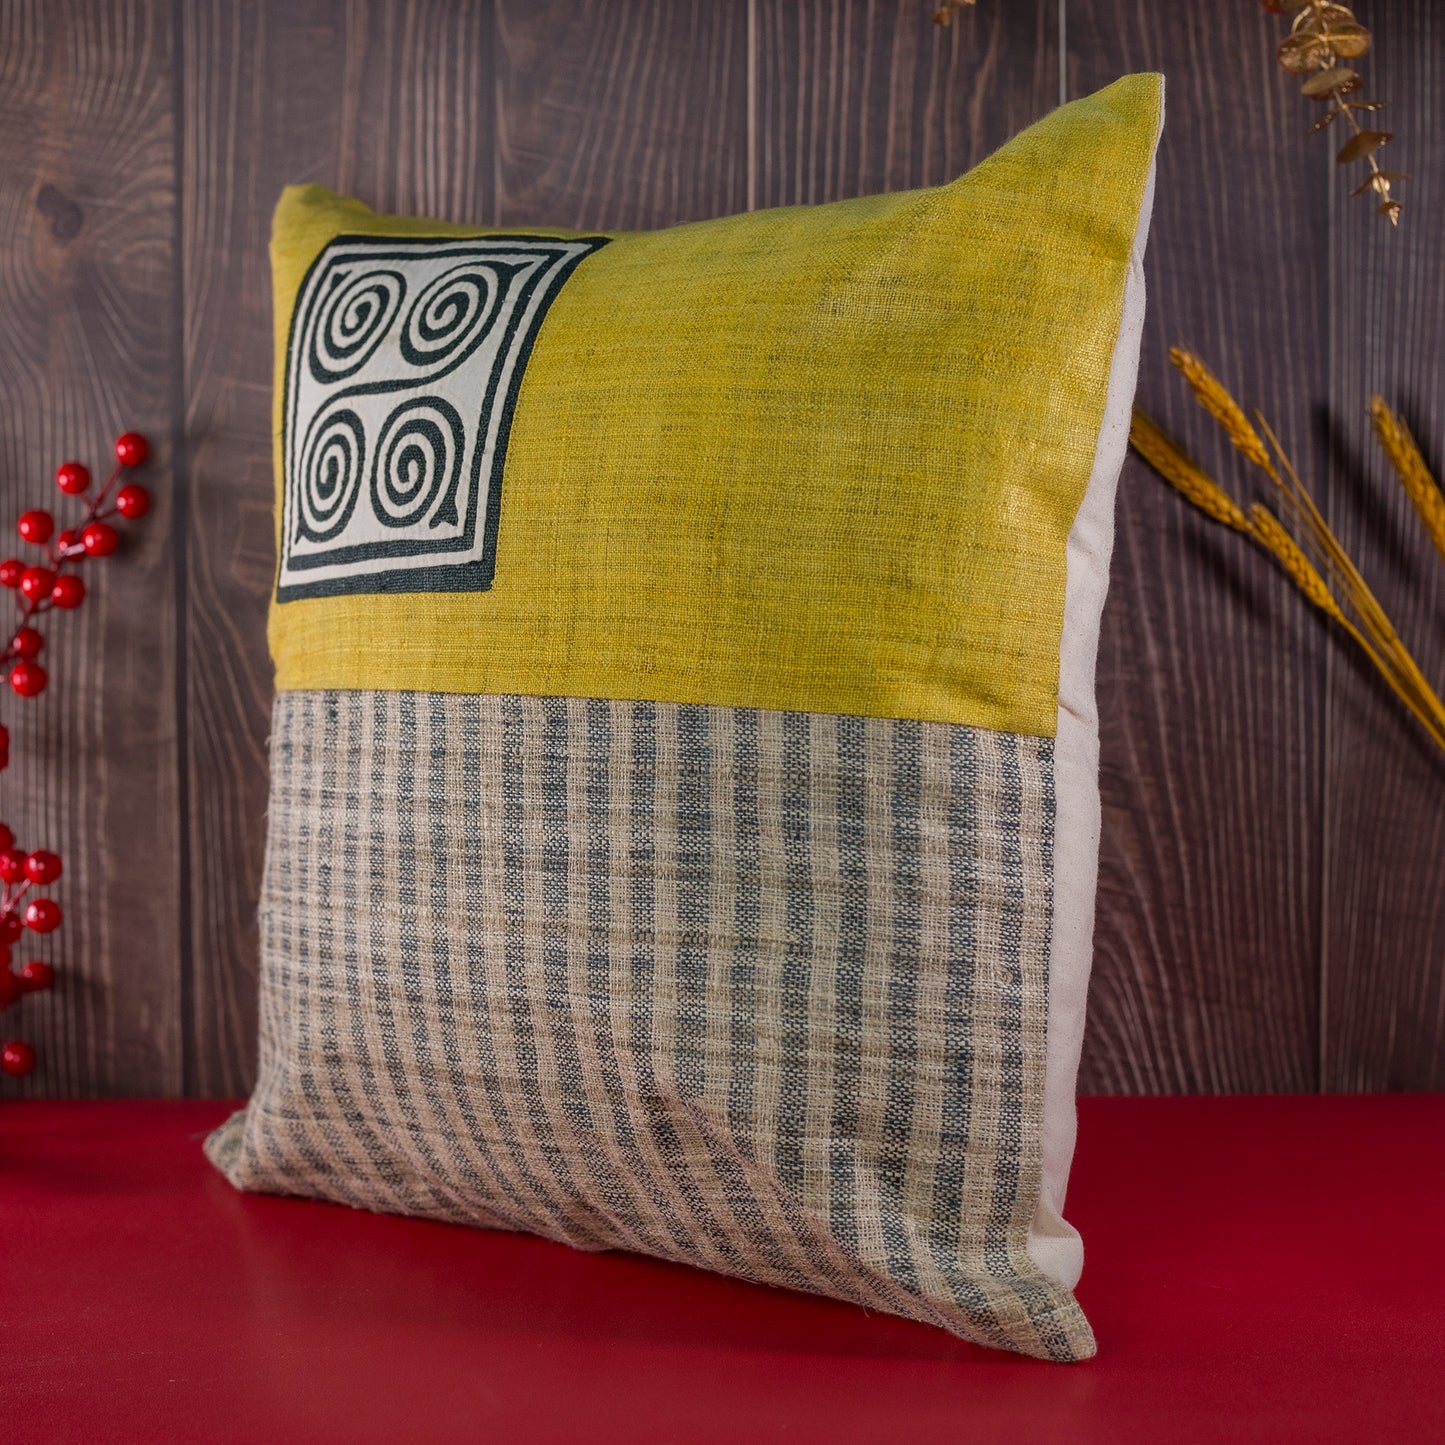 Yellow Hemp Cushion Cover - H'mong pattern, woven fabric stripes